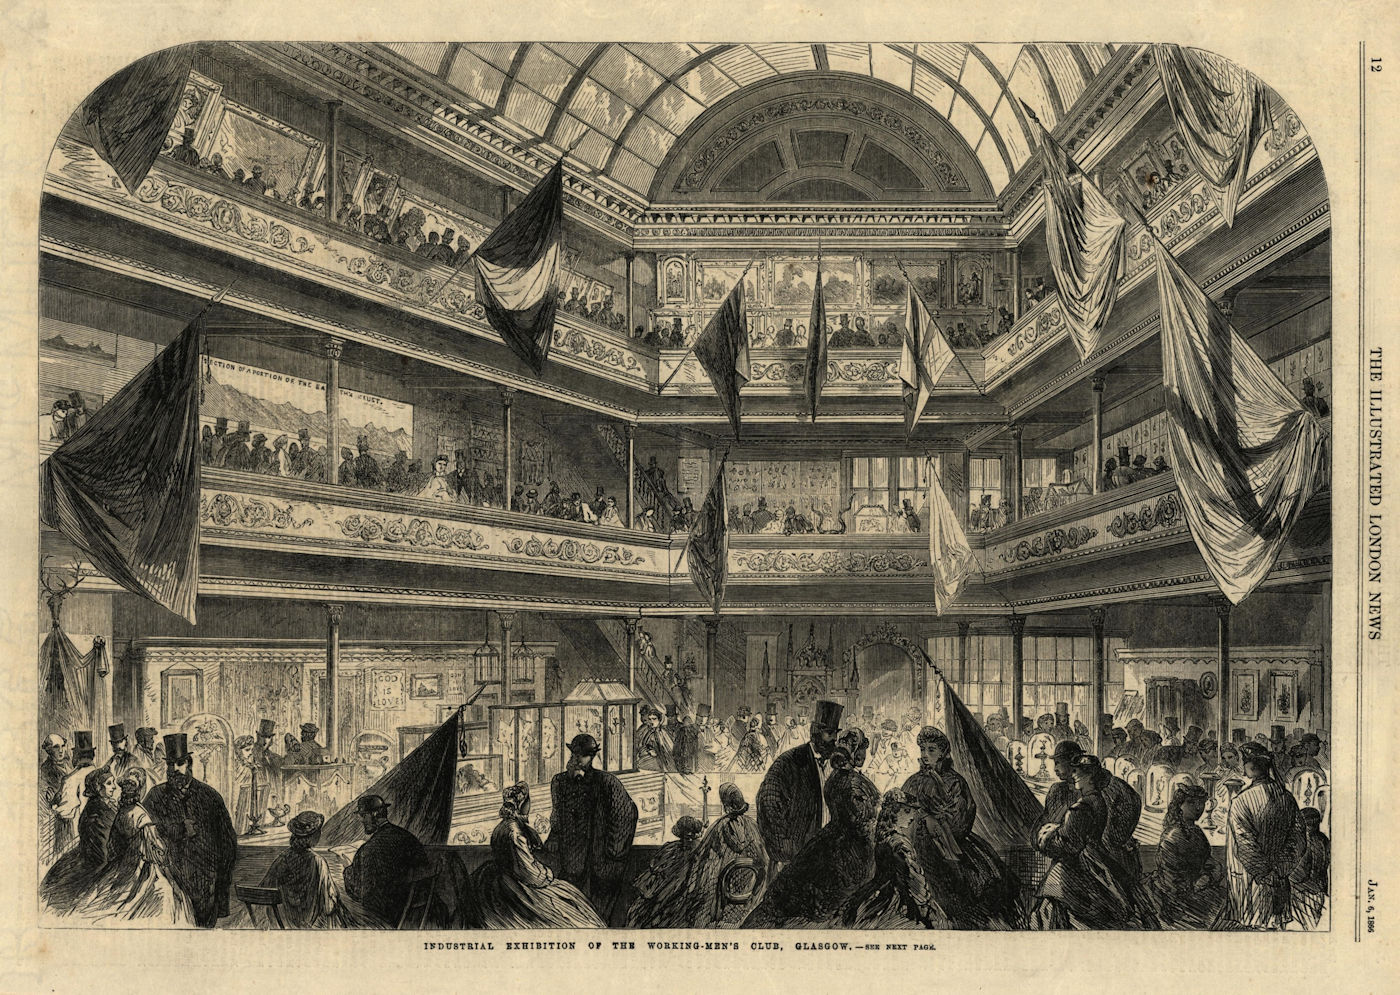 Industrial Exhibition of The Working-Men's Club, Glasgow. Scotland 1866 print